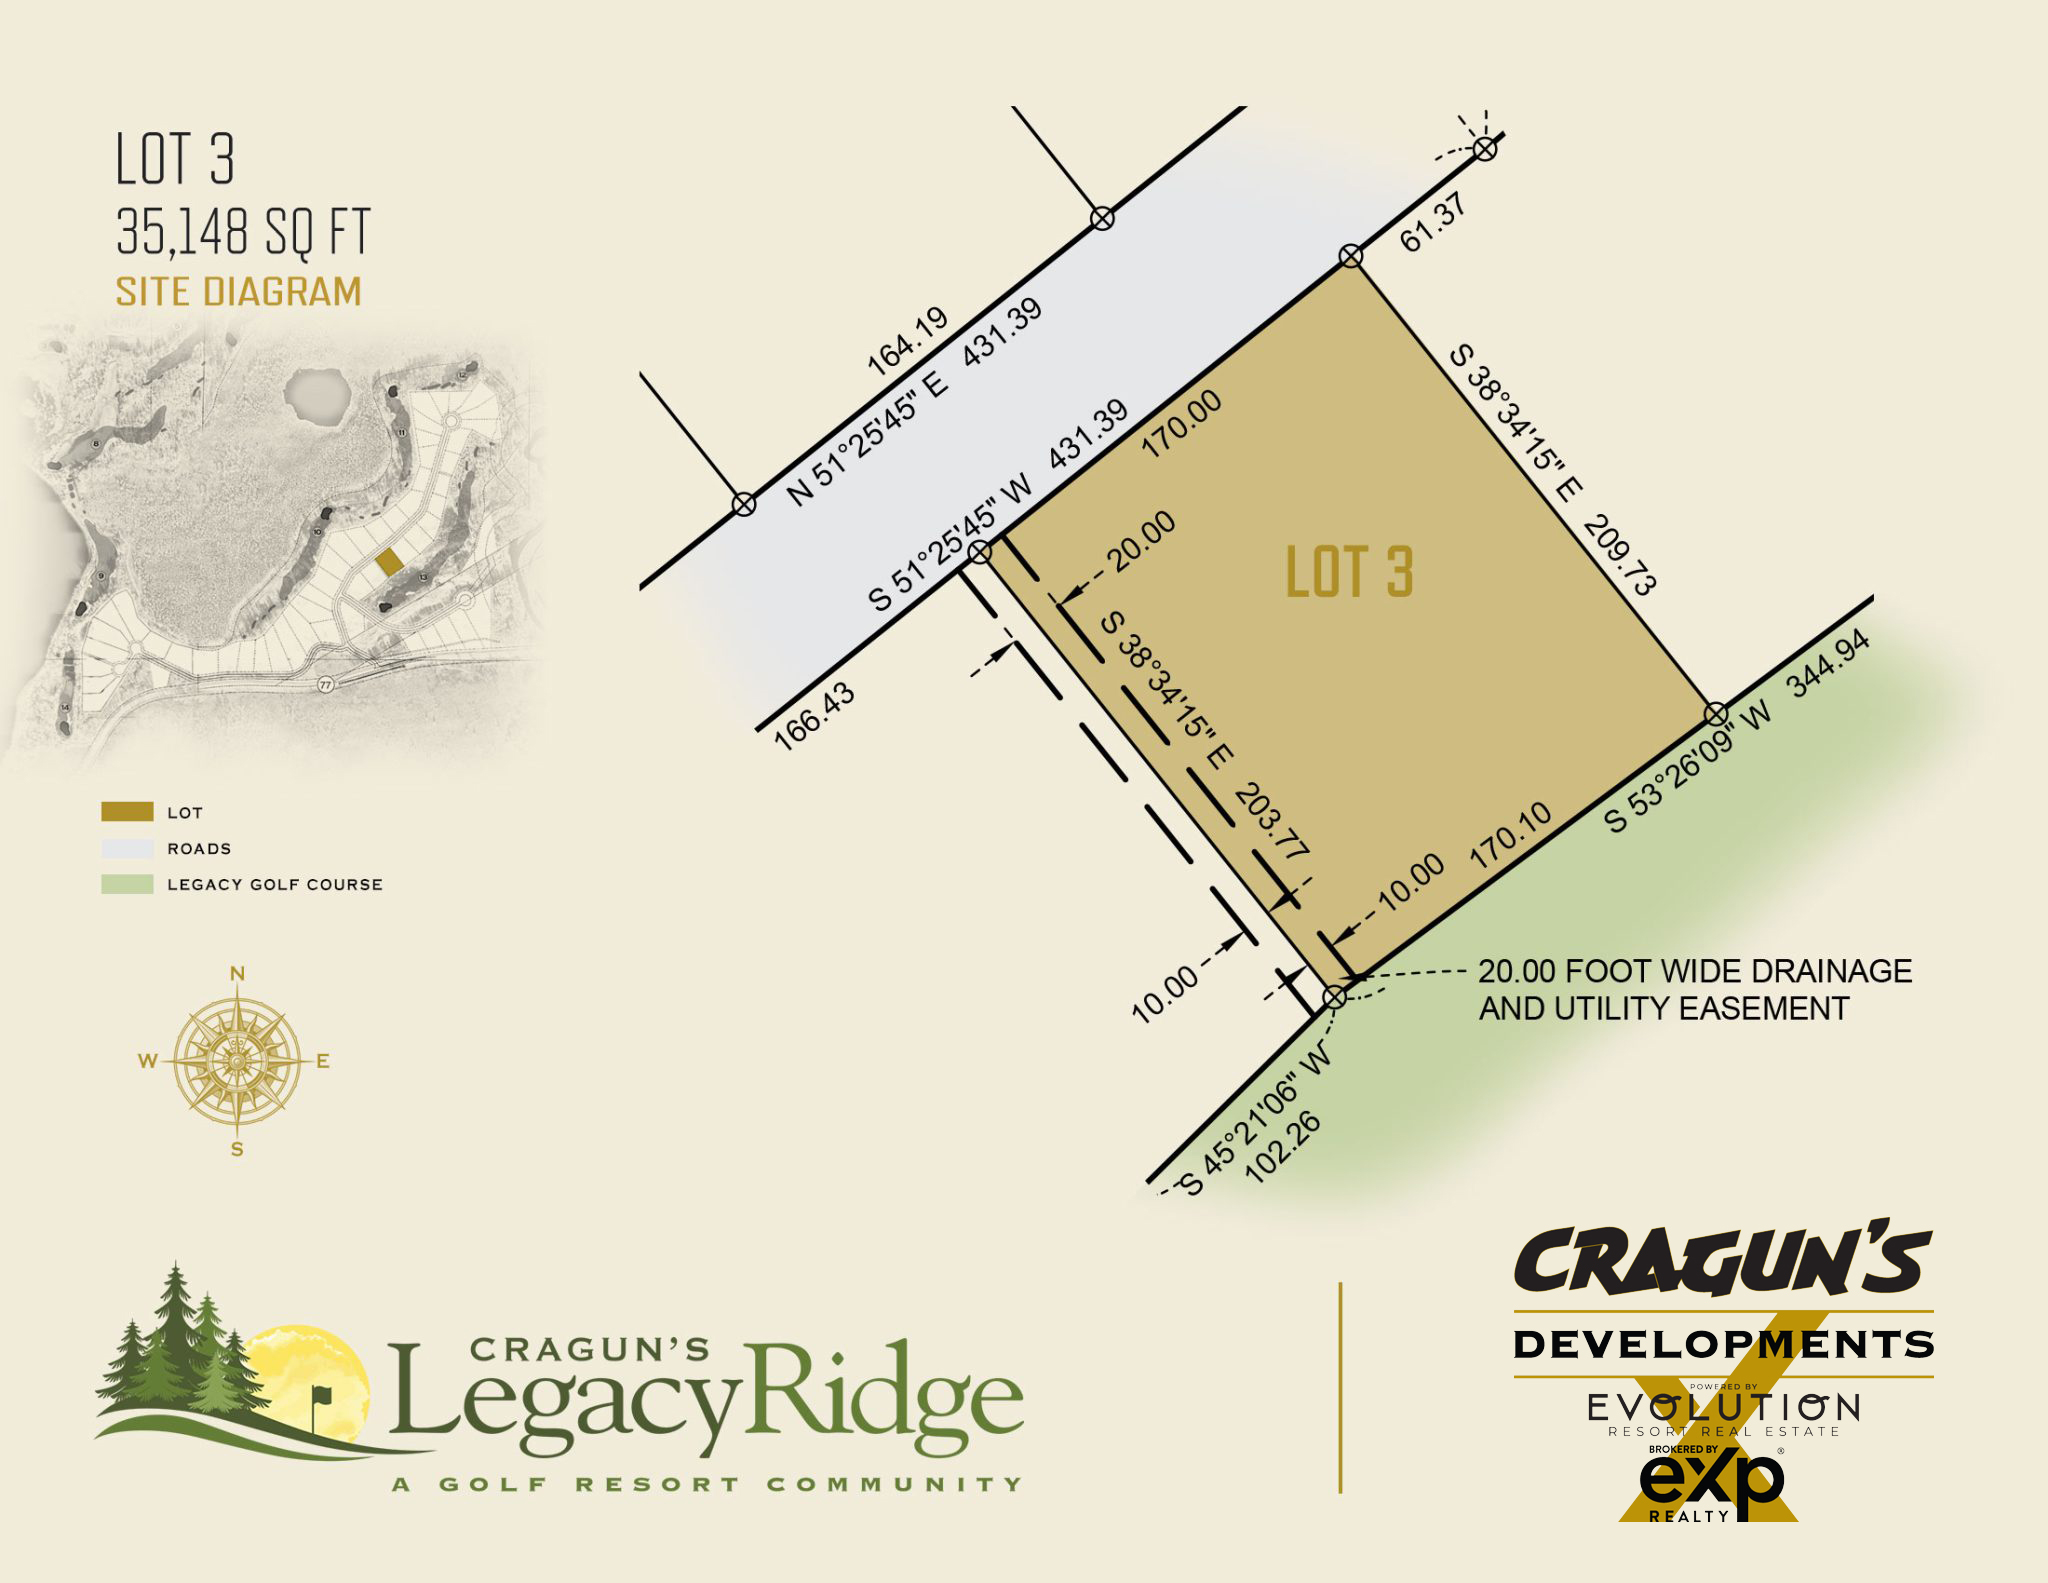 Legacy Ridge Lot 3 at Cragun's Developments in Brainerd, MN